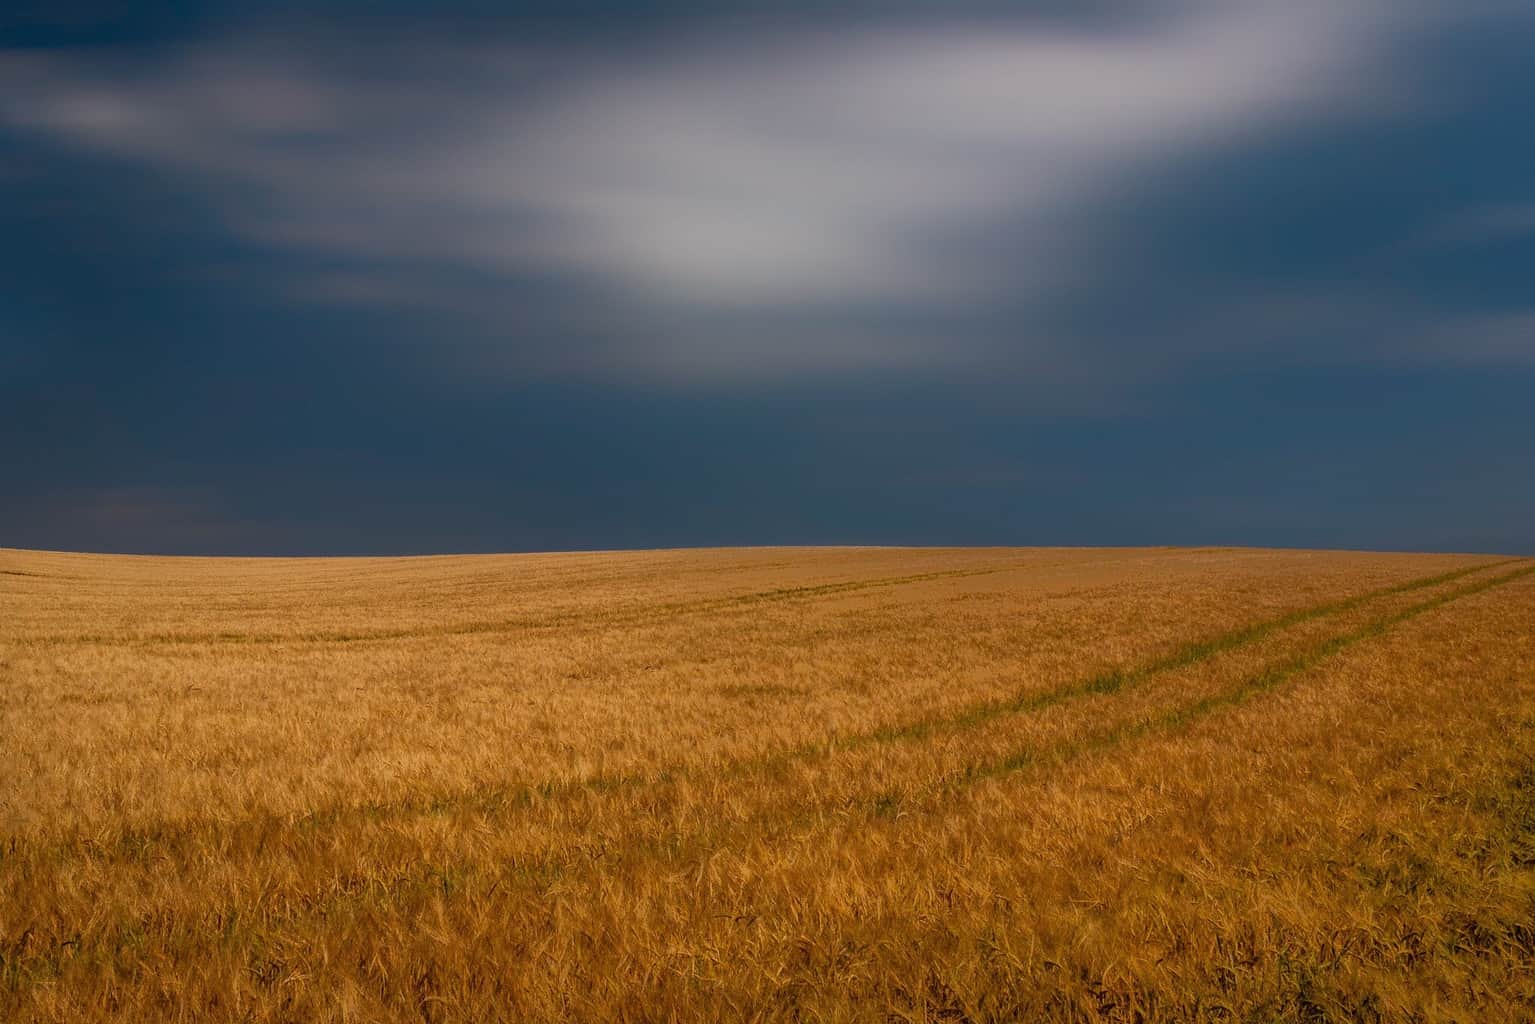  Field, Dorset, by landsacpe photograher Rick McEvoy 